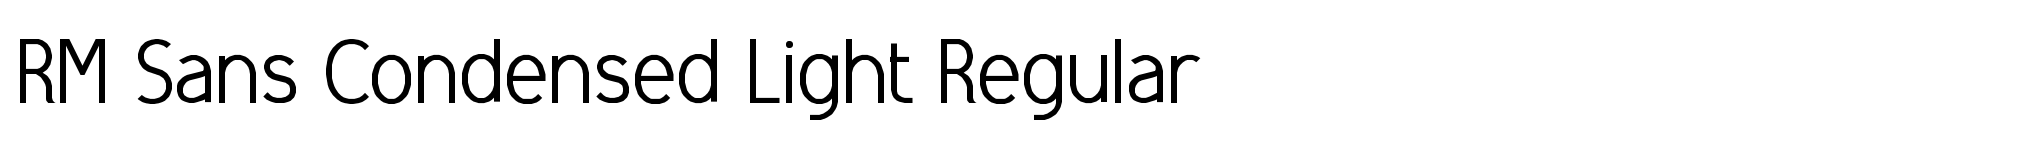 RM Sans Condensed Light Regular image